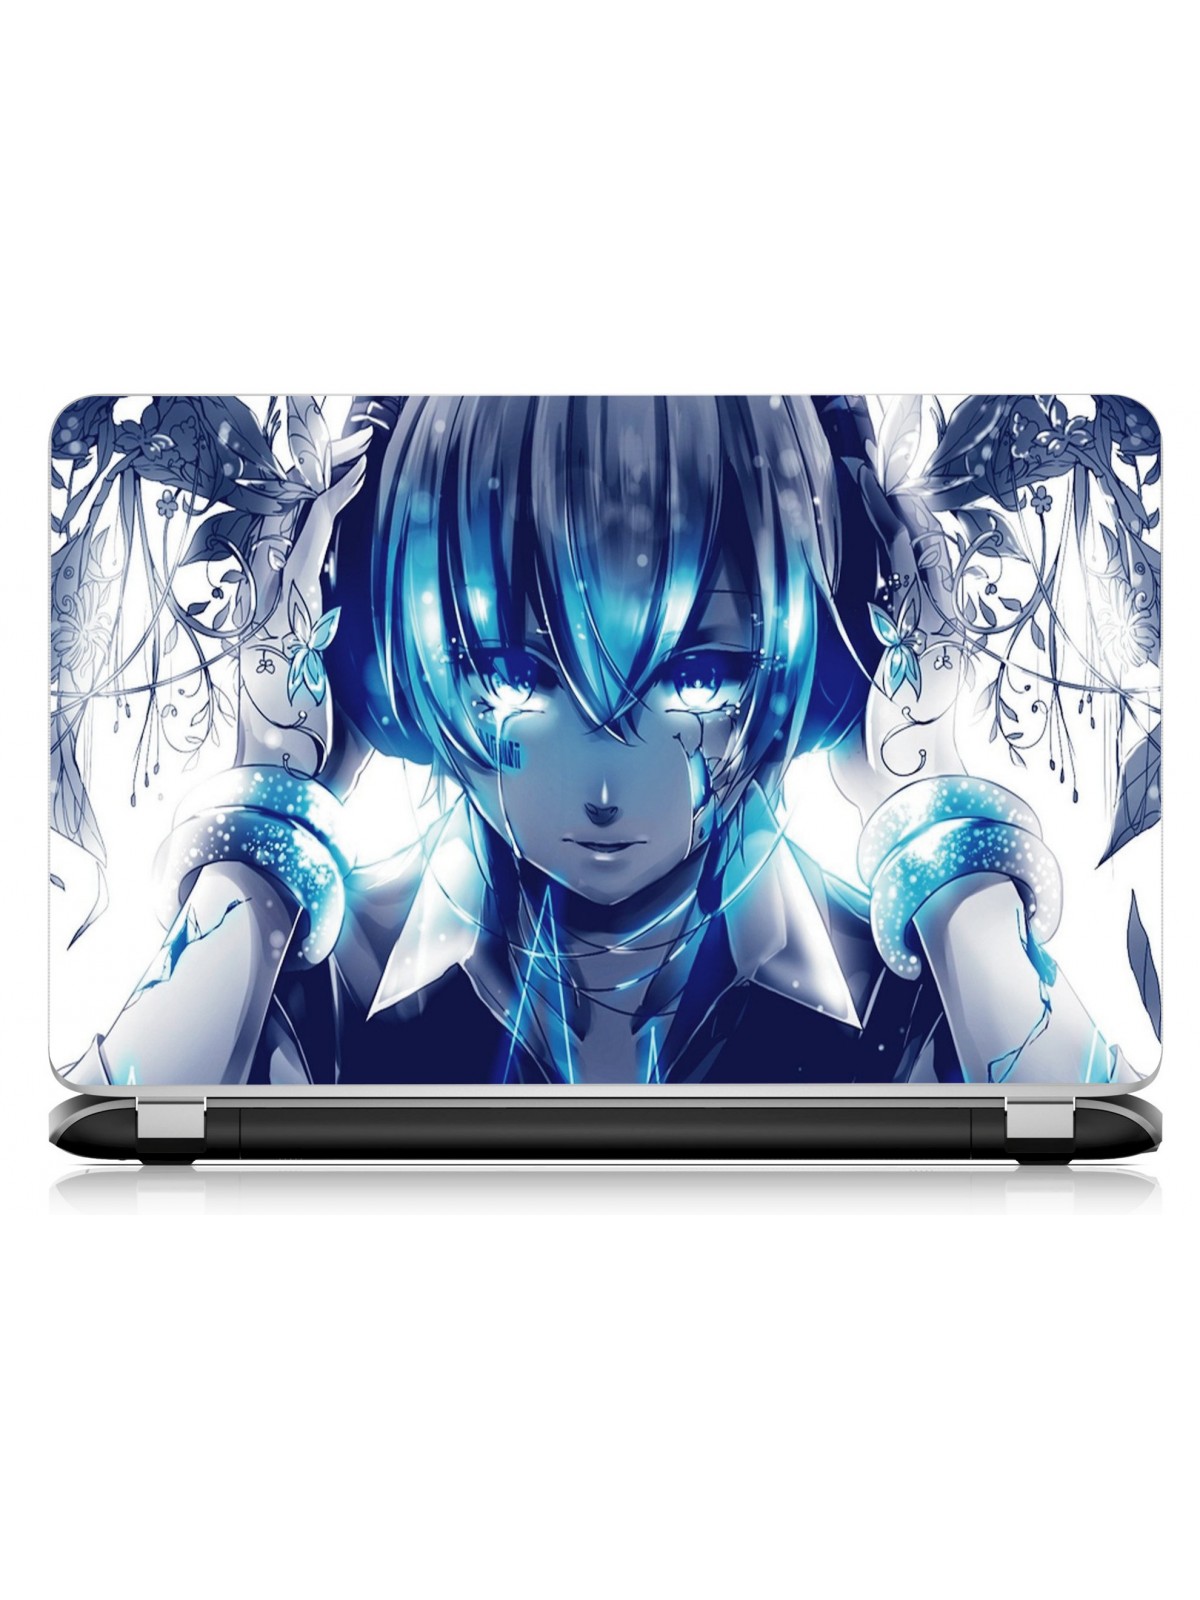 Stickers Autocollants ordinateur portable PC manga girl ref 482